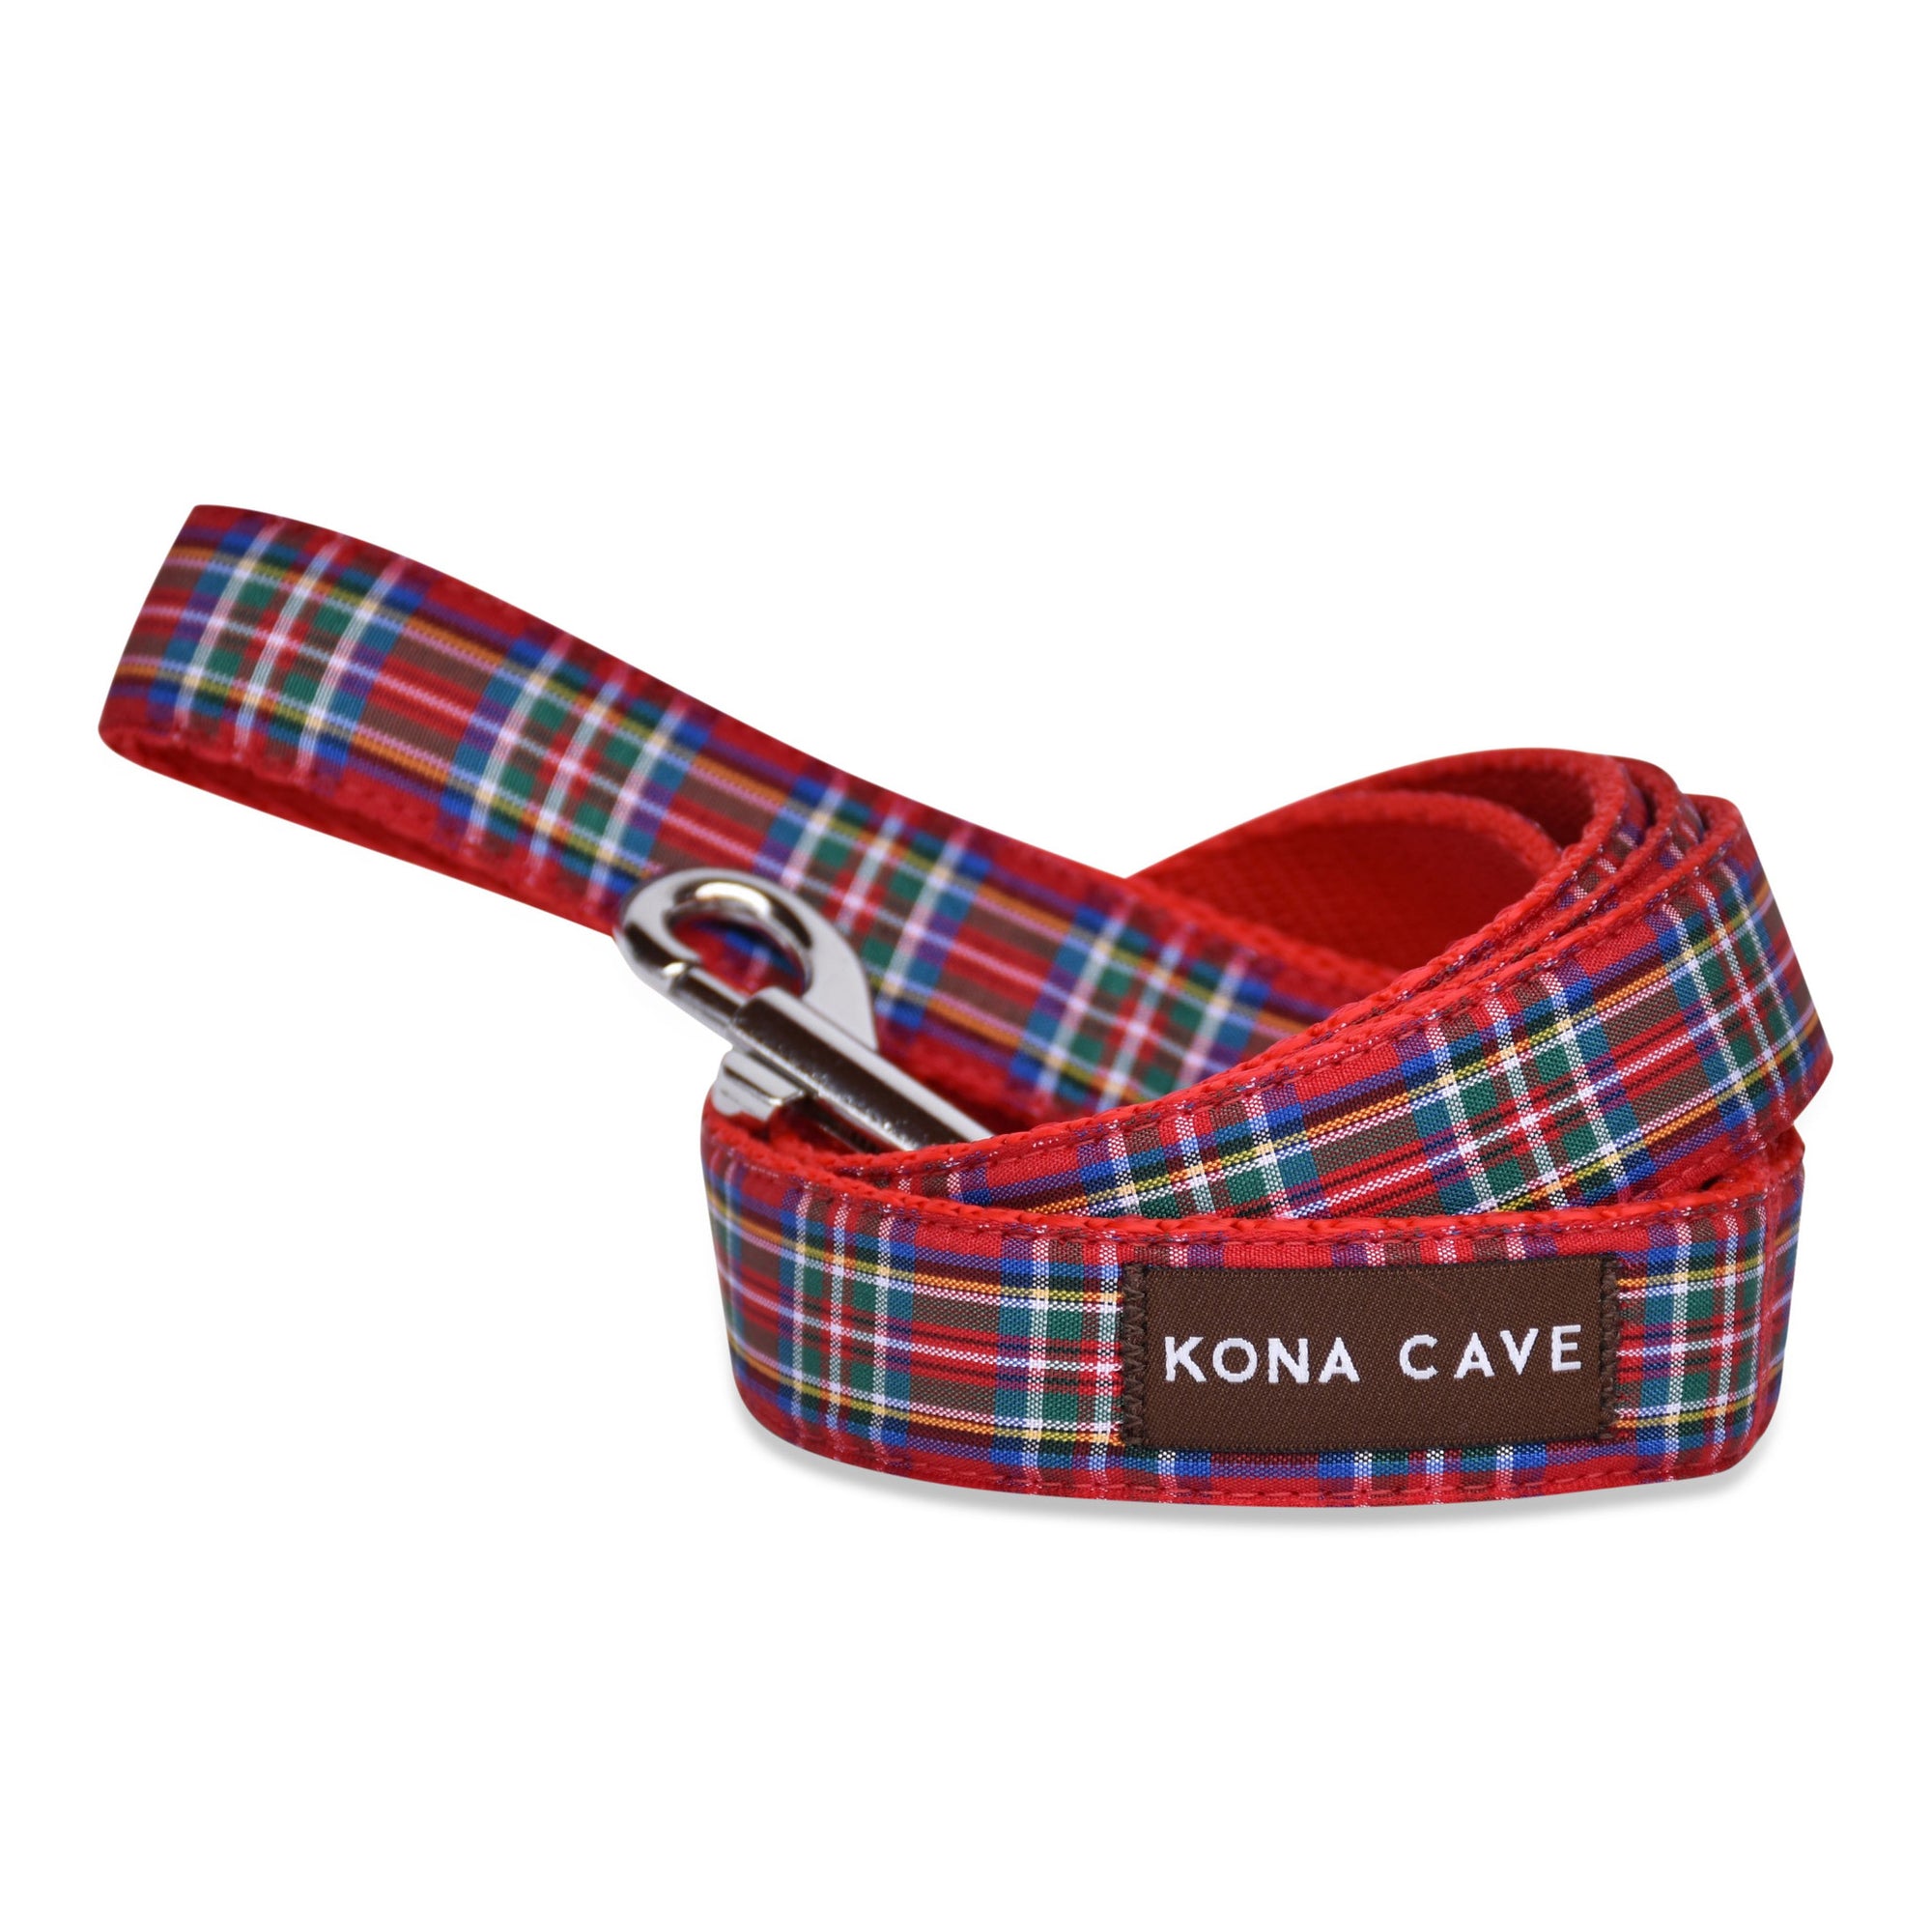 KONA CAVE ® - dog leash / lead in authentic Royal Stewart tartan (red)